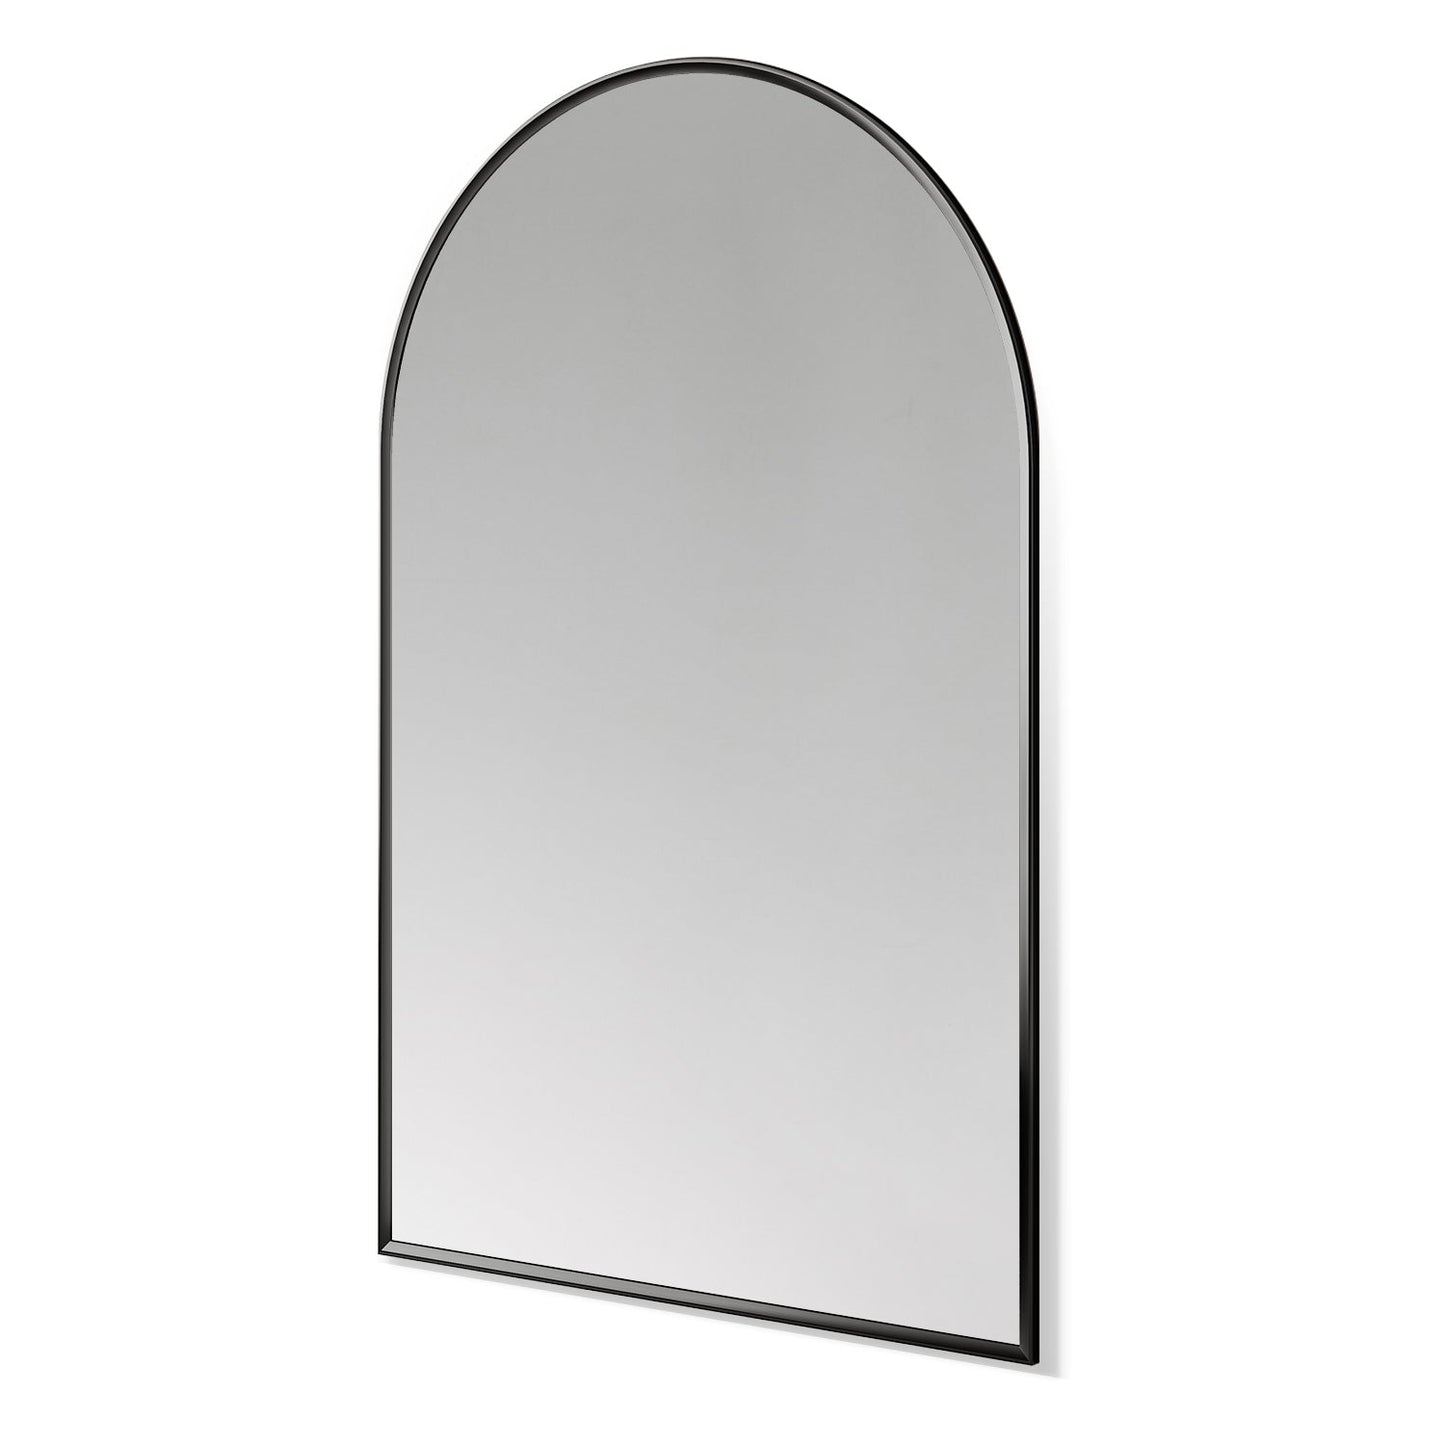 Benoni 24" Classic Domed Bathroom/Vanity Matt Black Aluminum Framed Wall Mirror